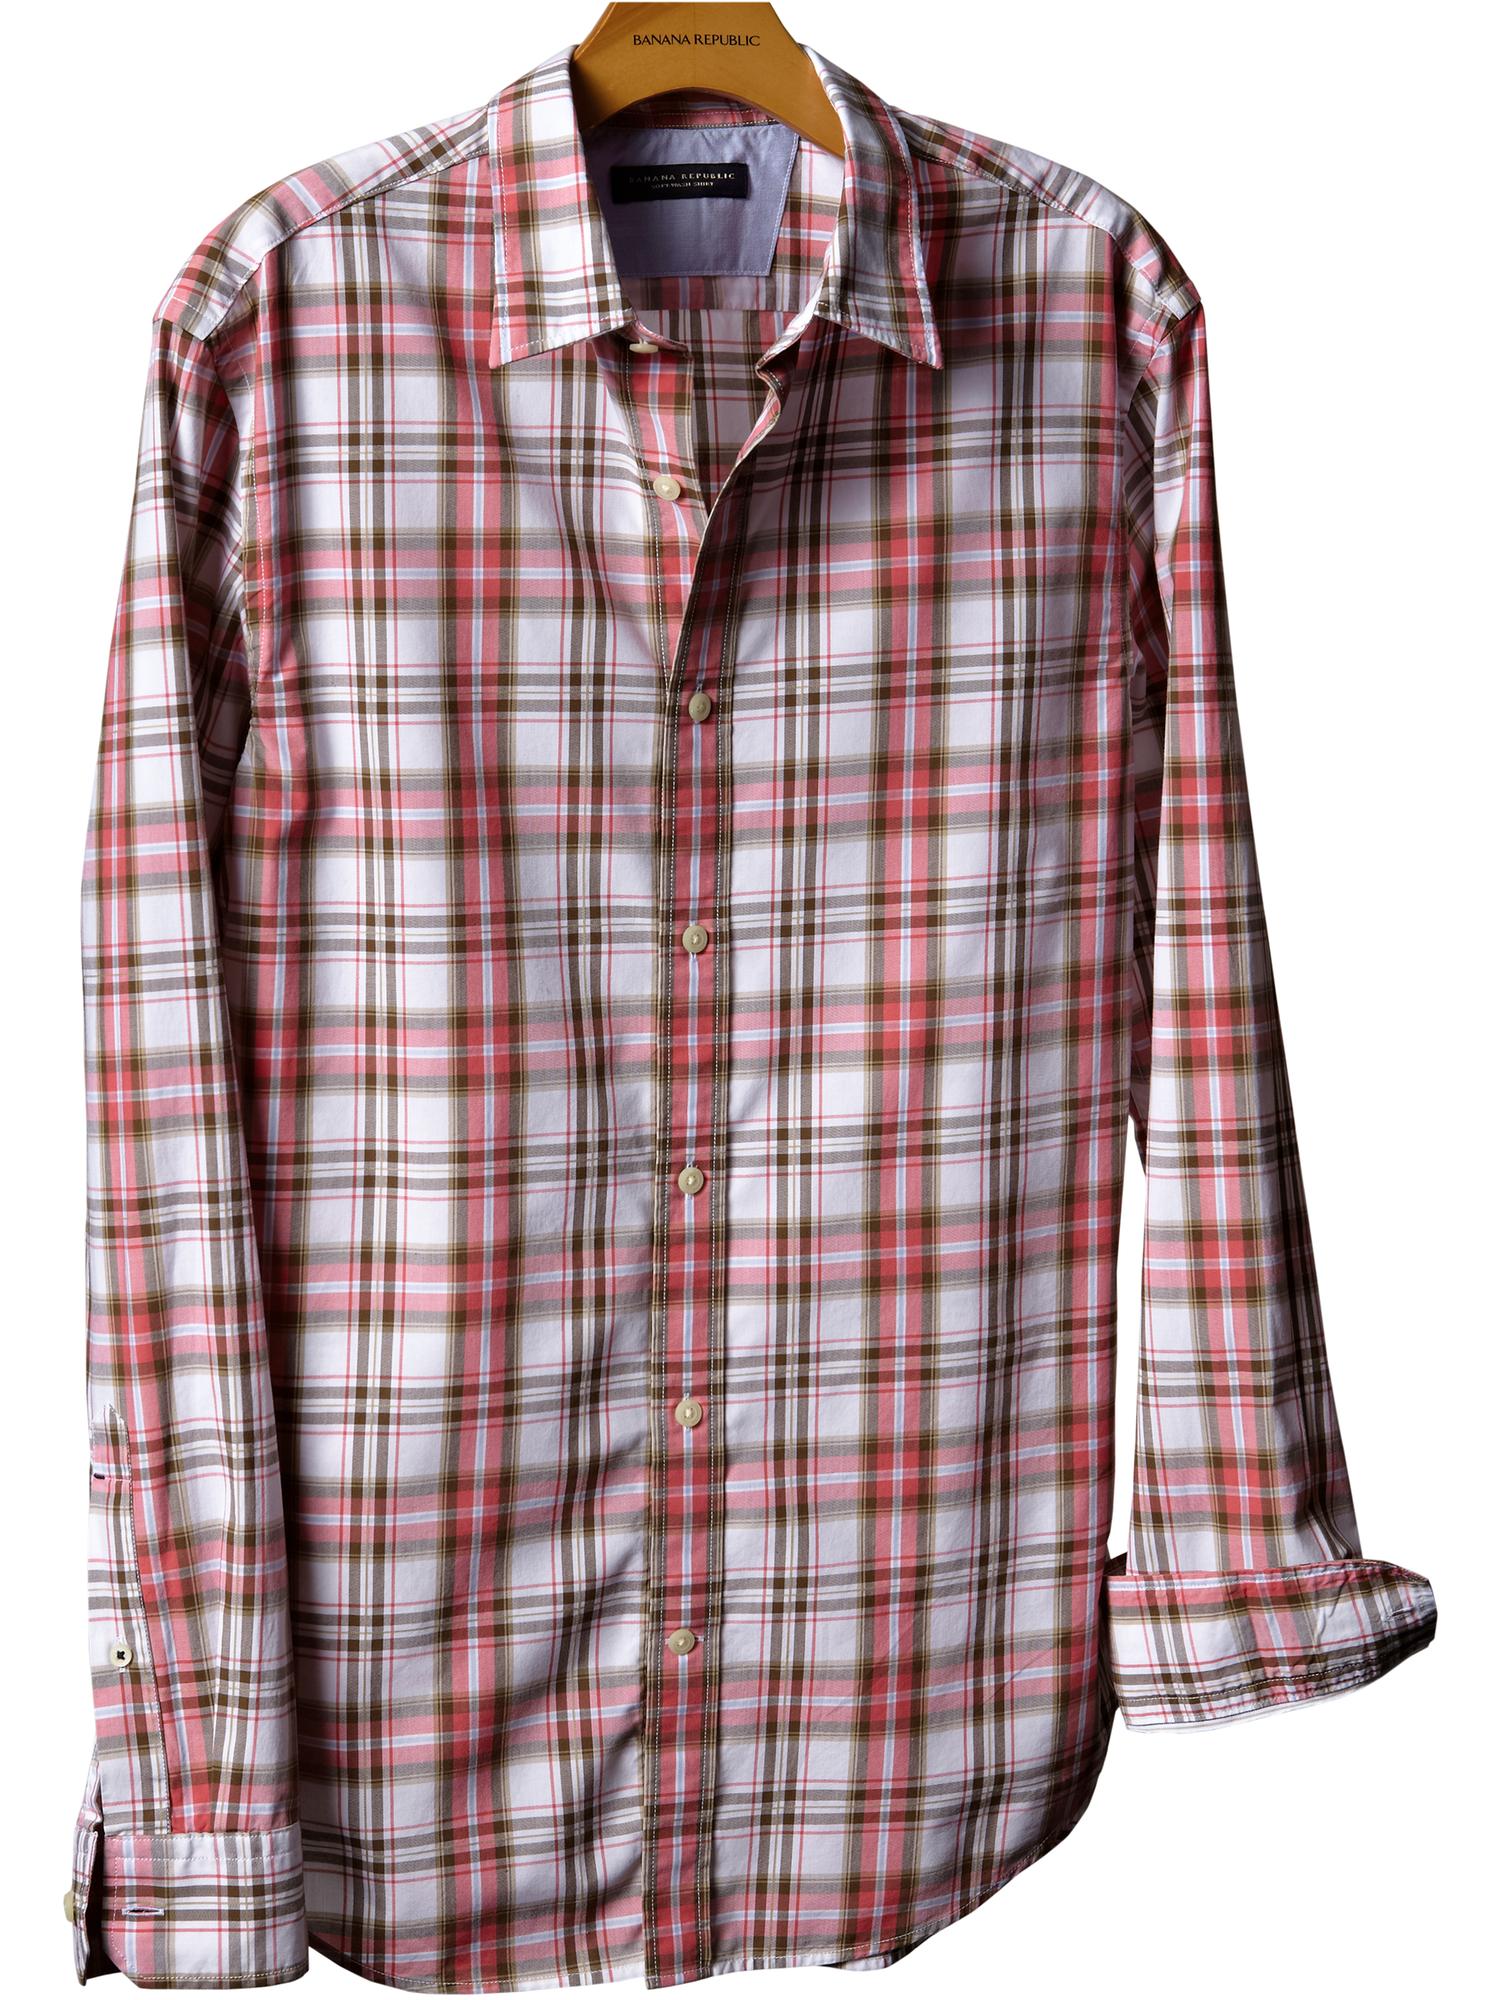 Soft-wash slim fit bold plaid shirt